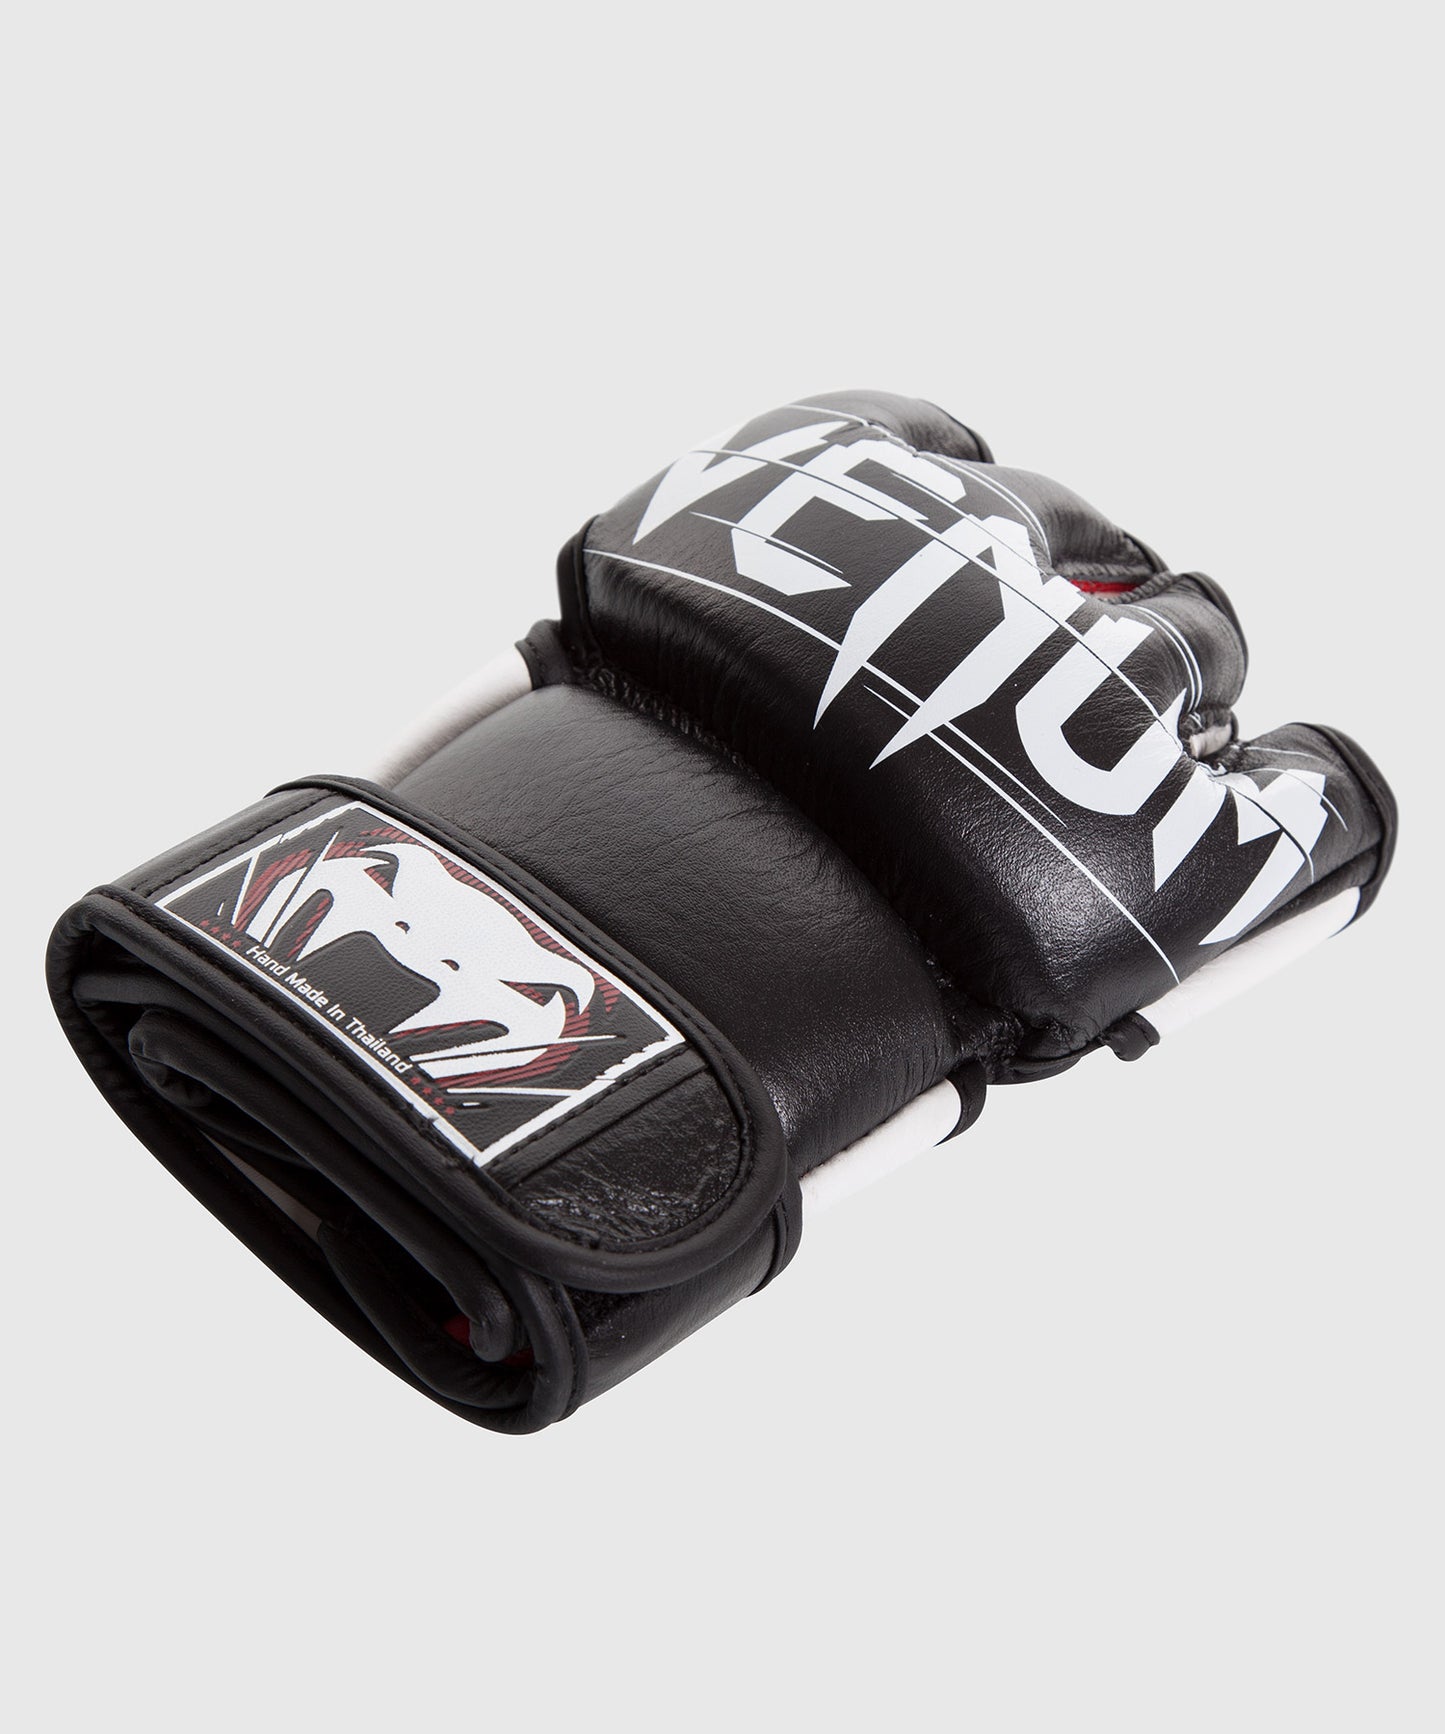 Venum Undisputed 2.0 MMA Gloves - Nappa Leather - Black